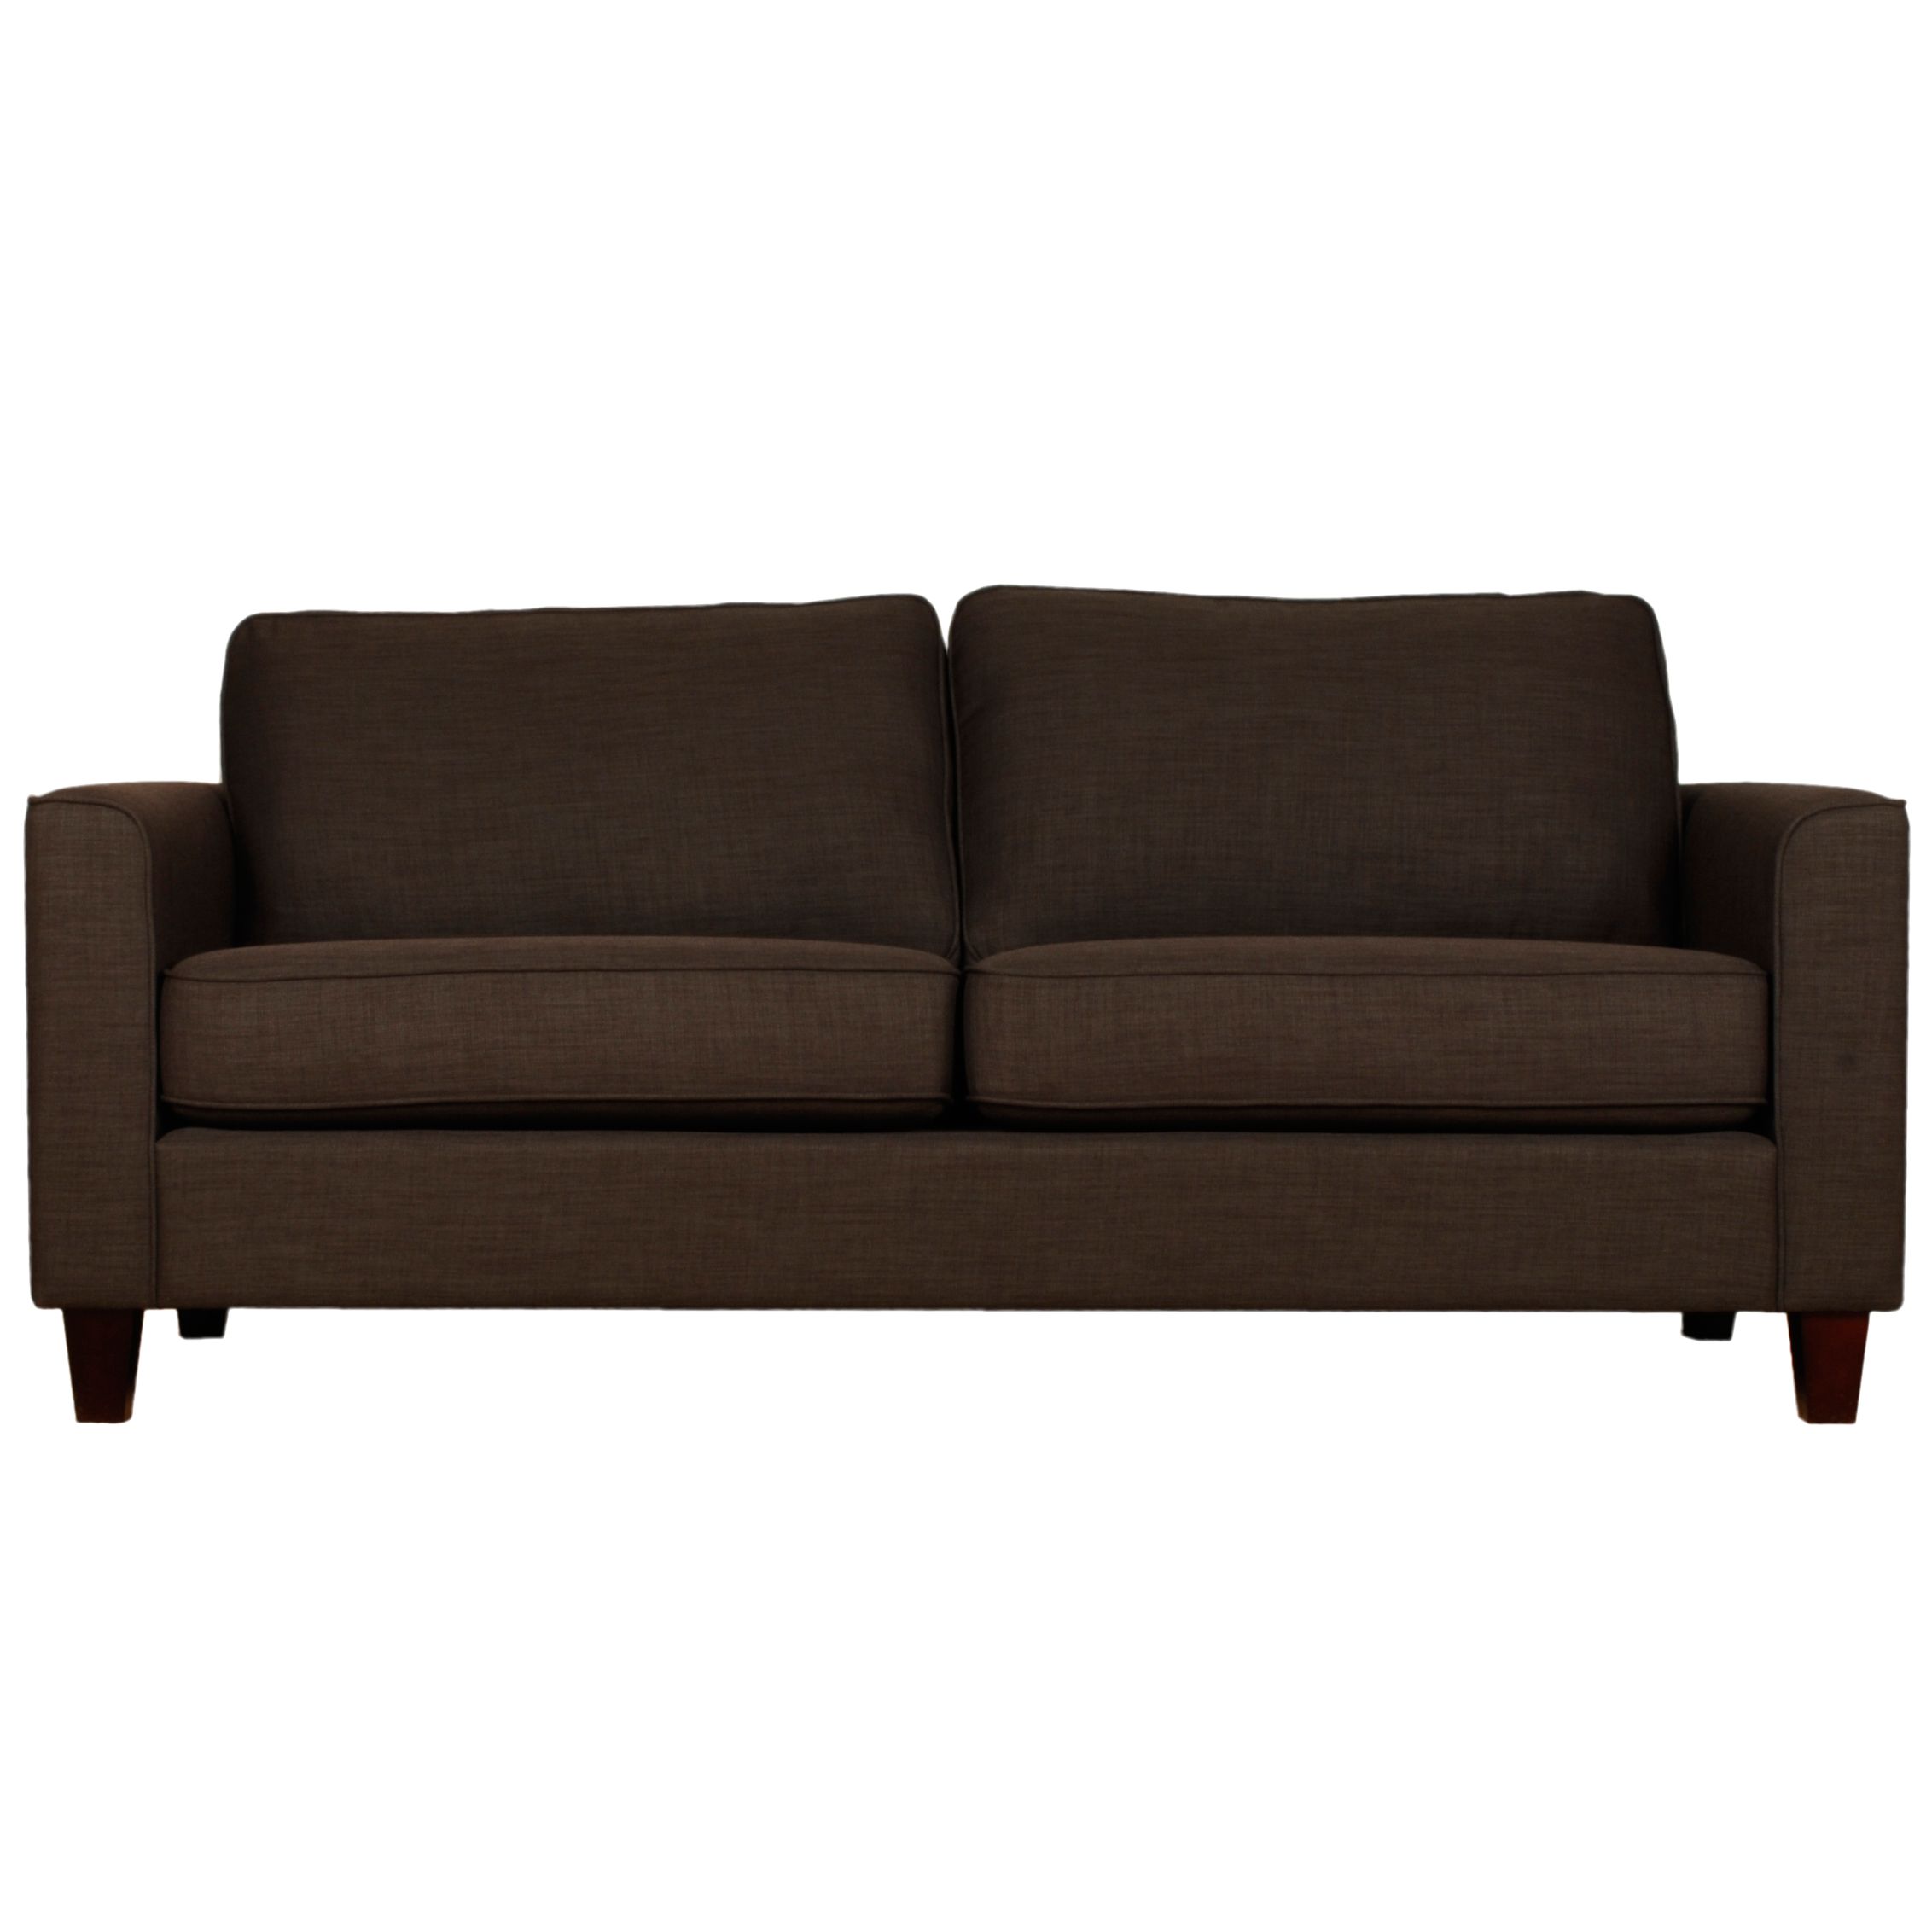 John Lewis Portia Medium Sofa, Charcoal at JohnLewis